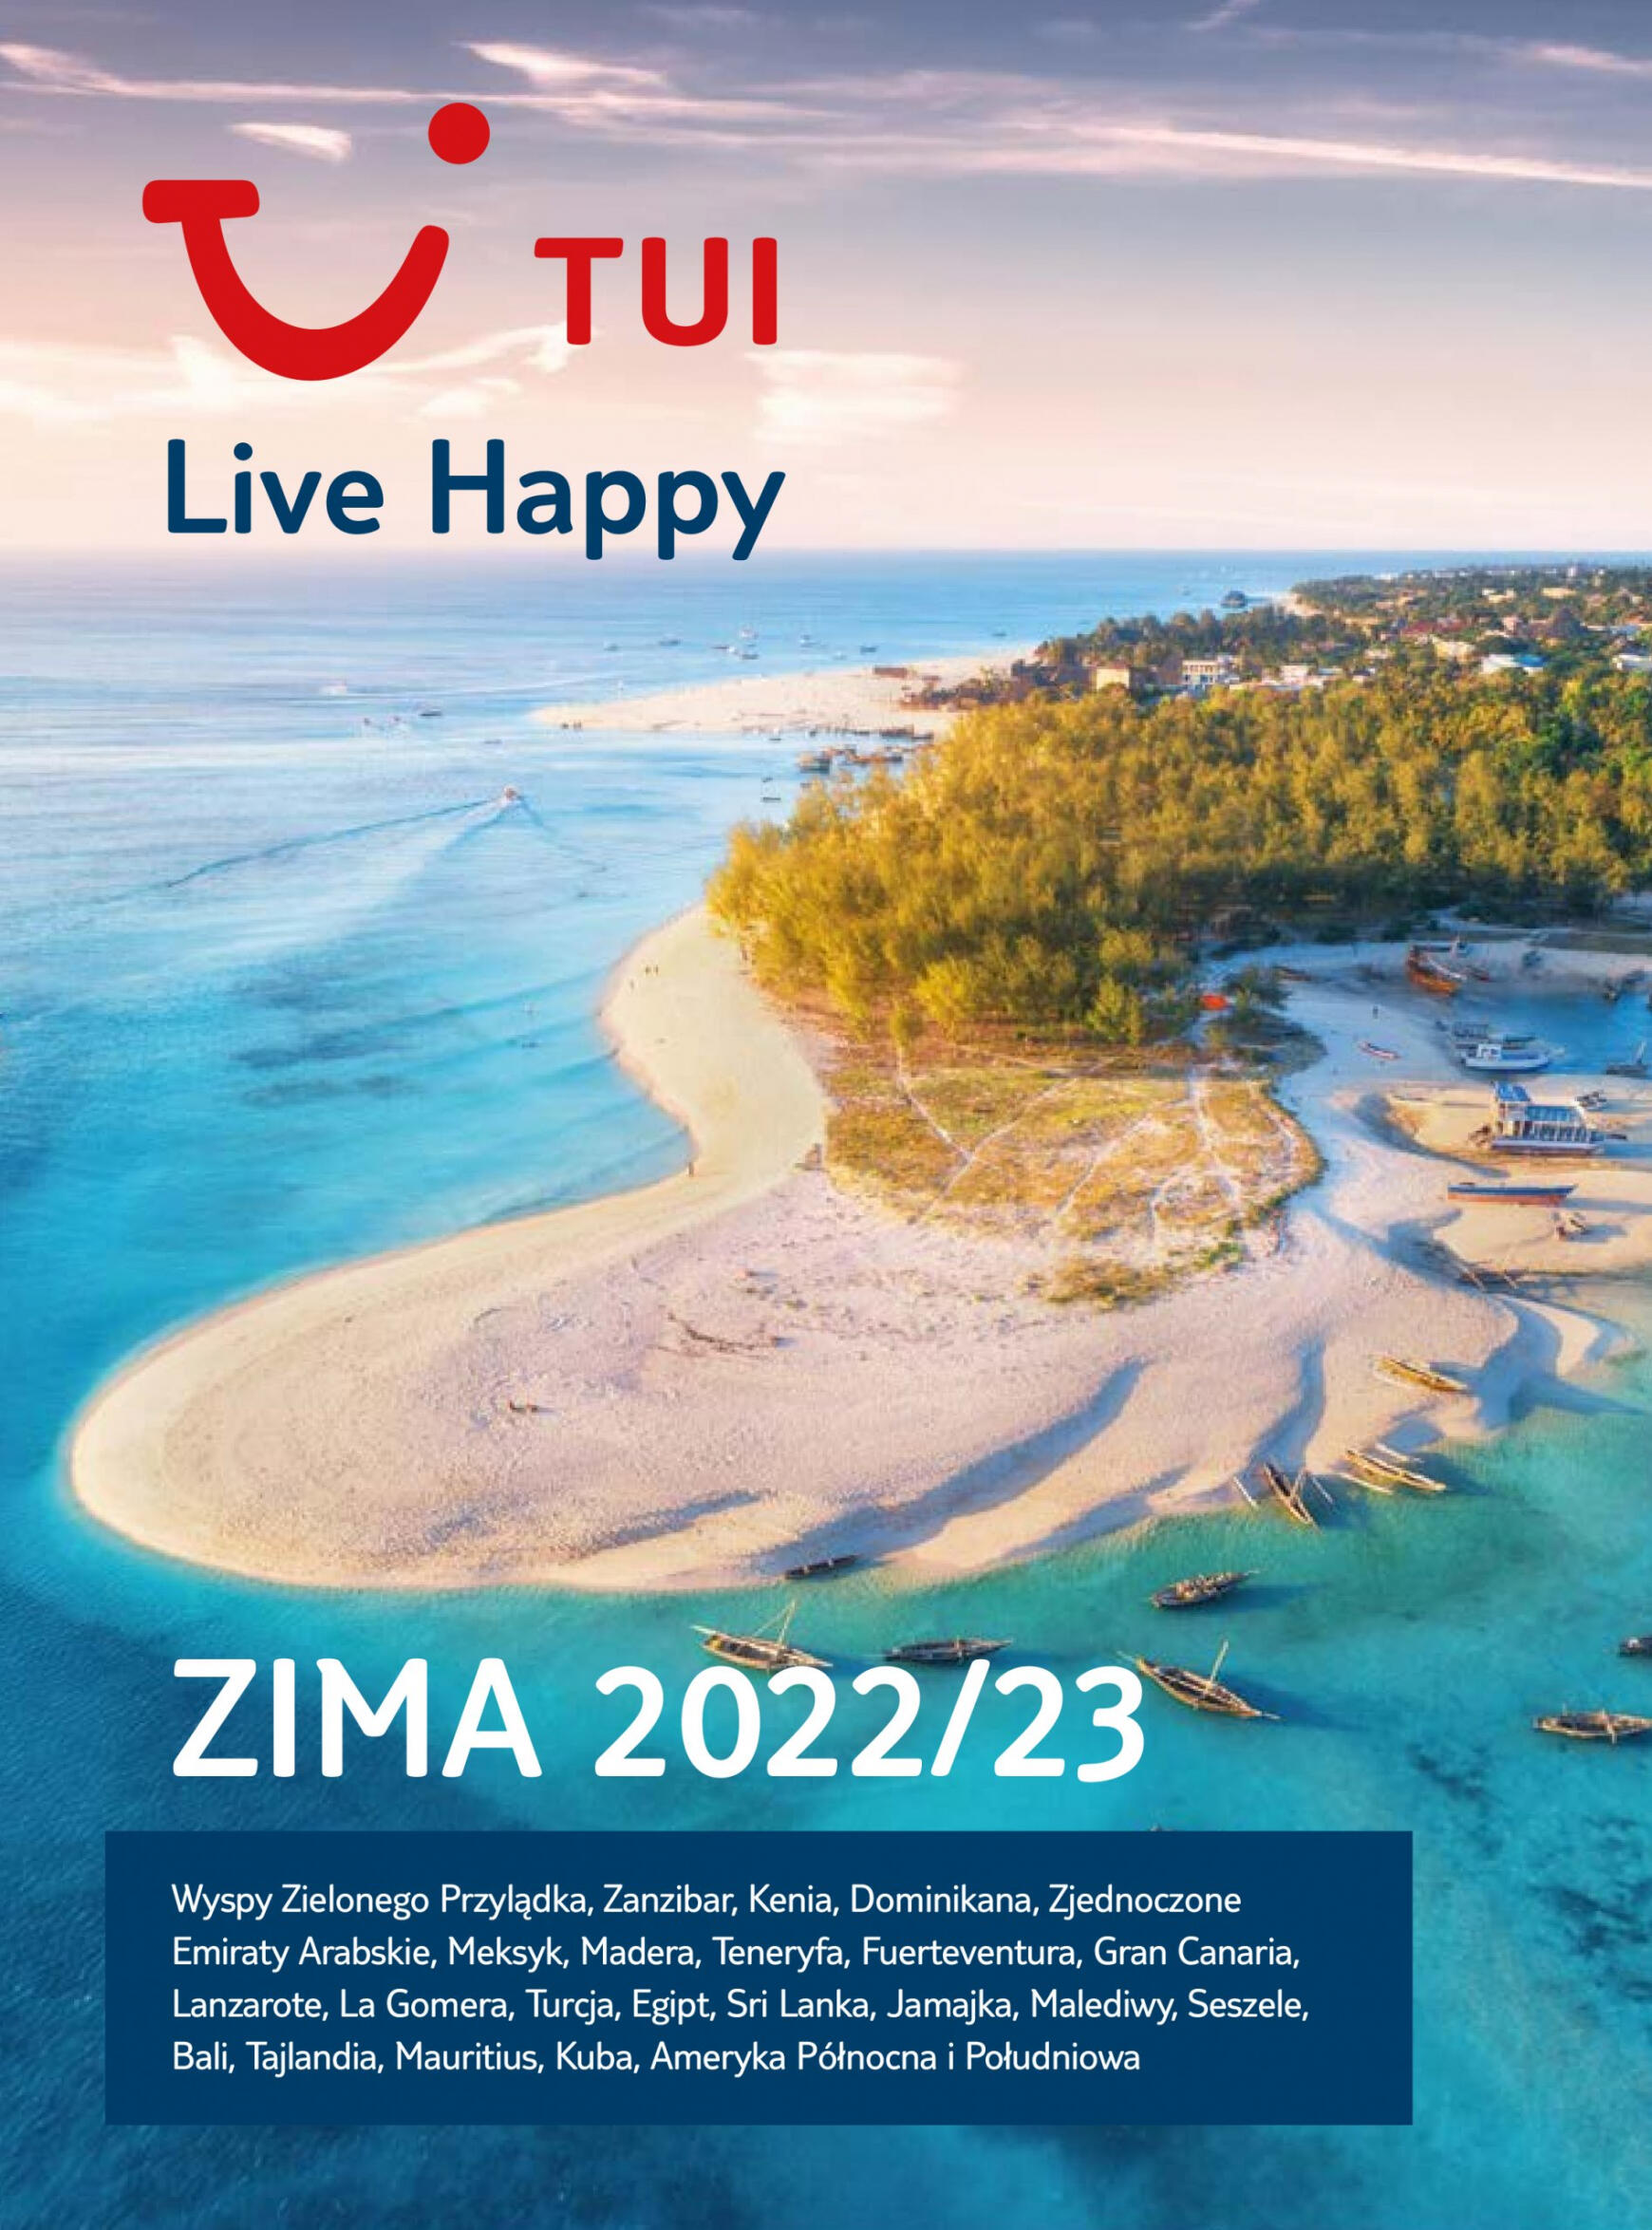 tui - TUI Zima 2022/2023 - page: 1